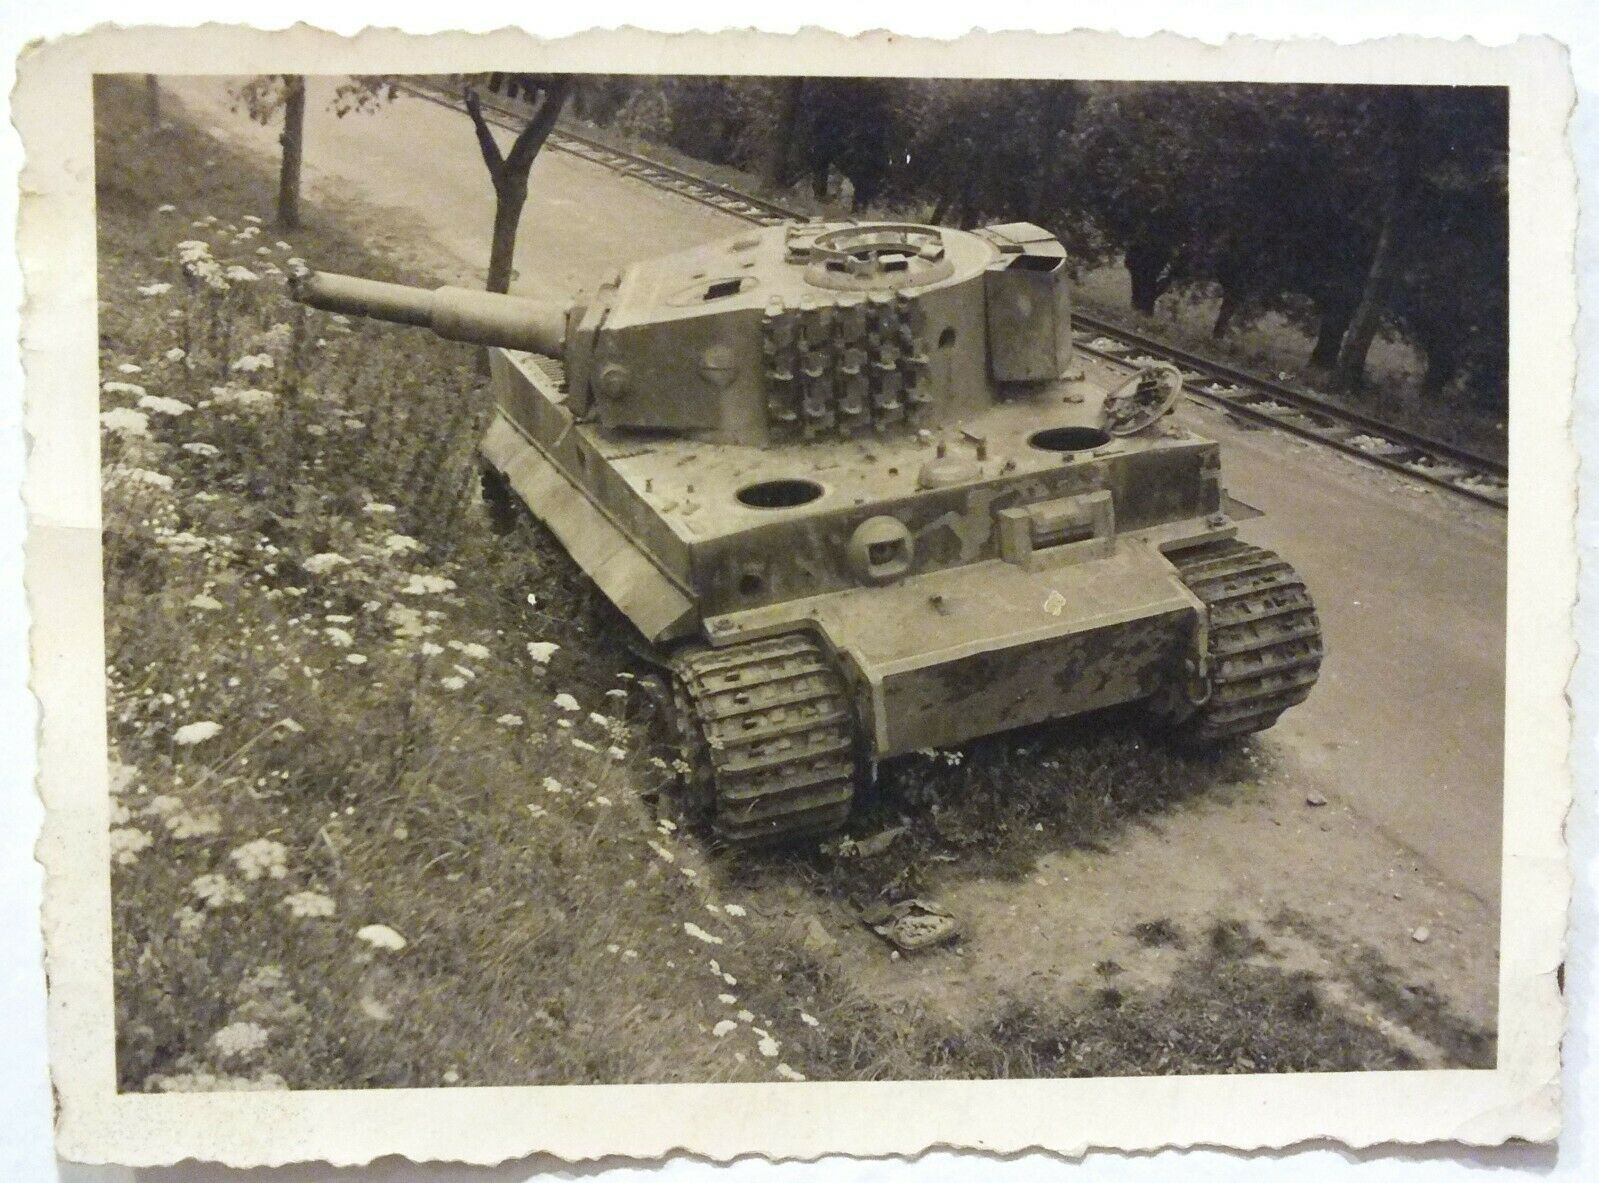 WW2 captured German Tiger I photo